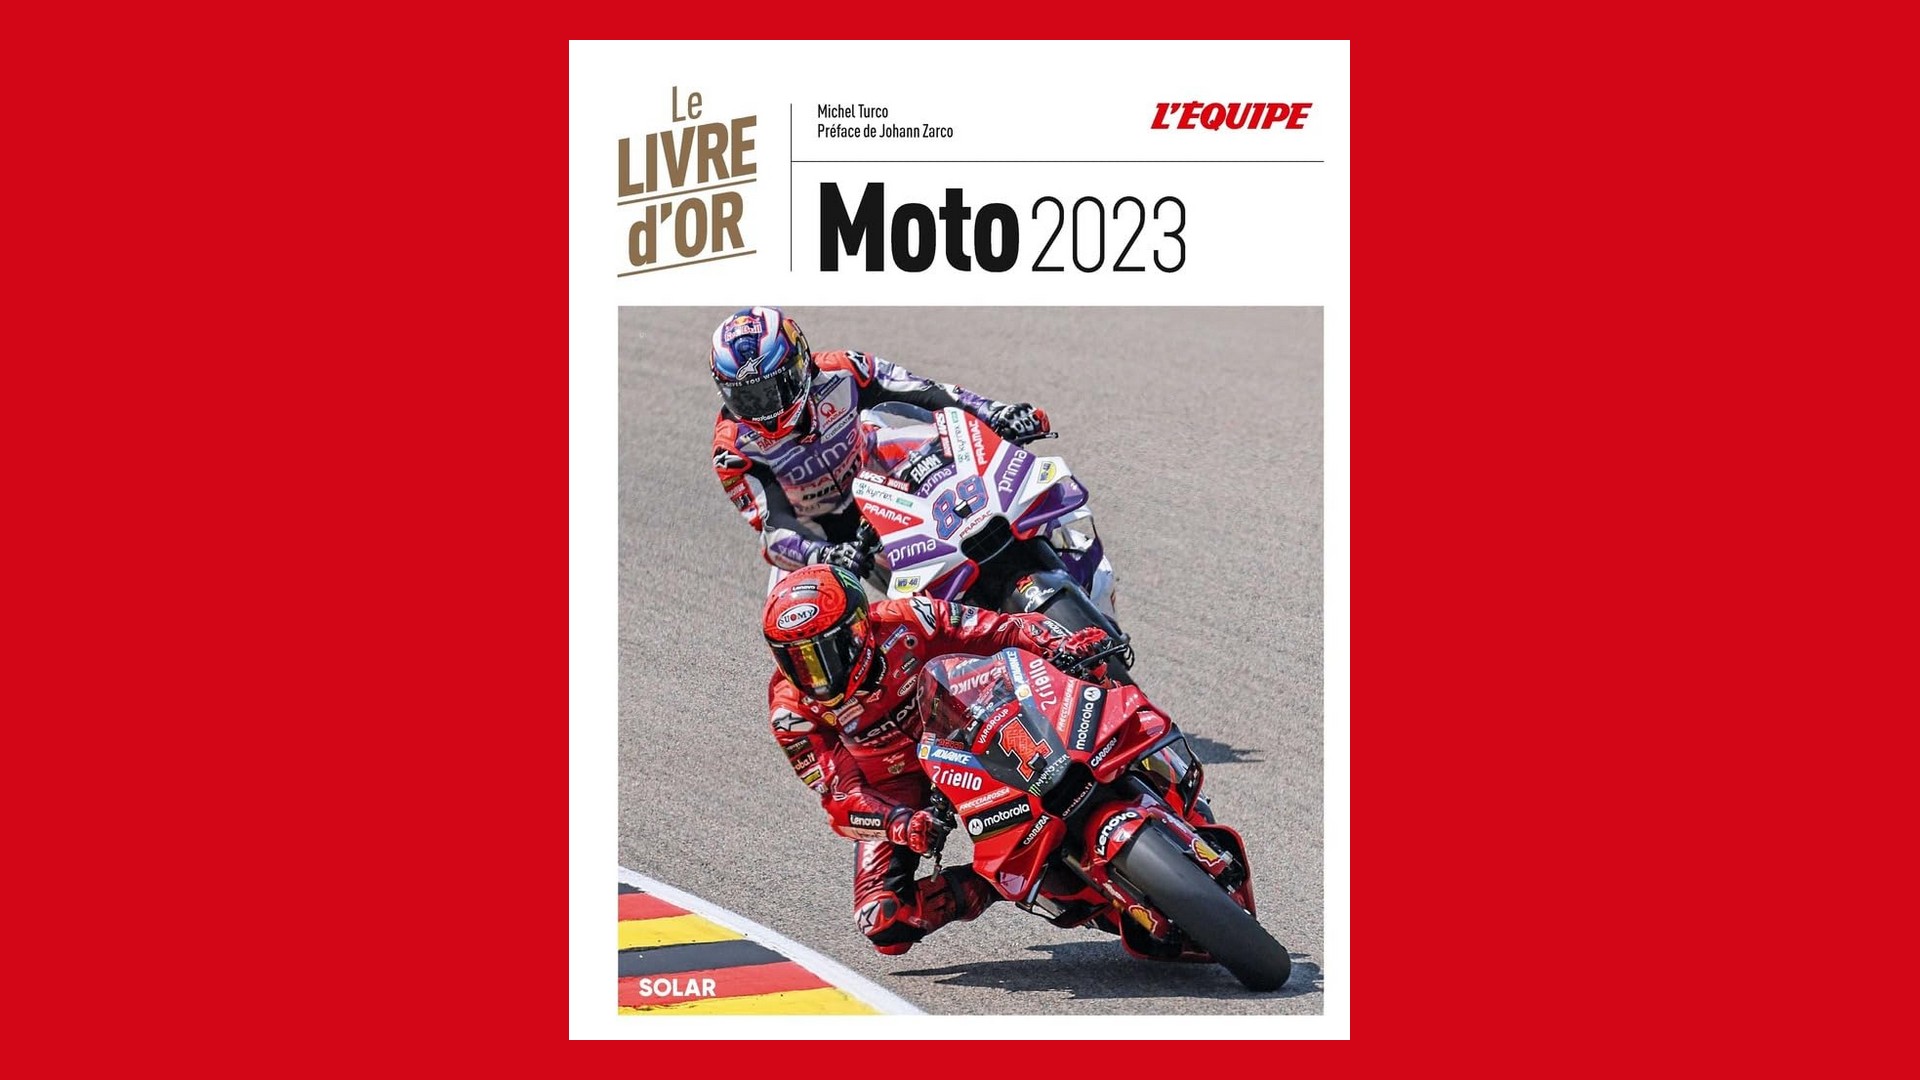 Livre d'or de la moto 2023, Michel Turco